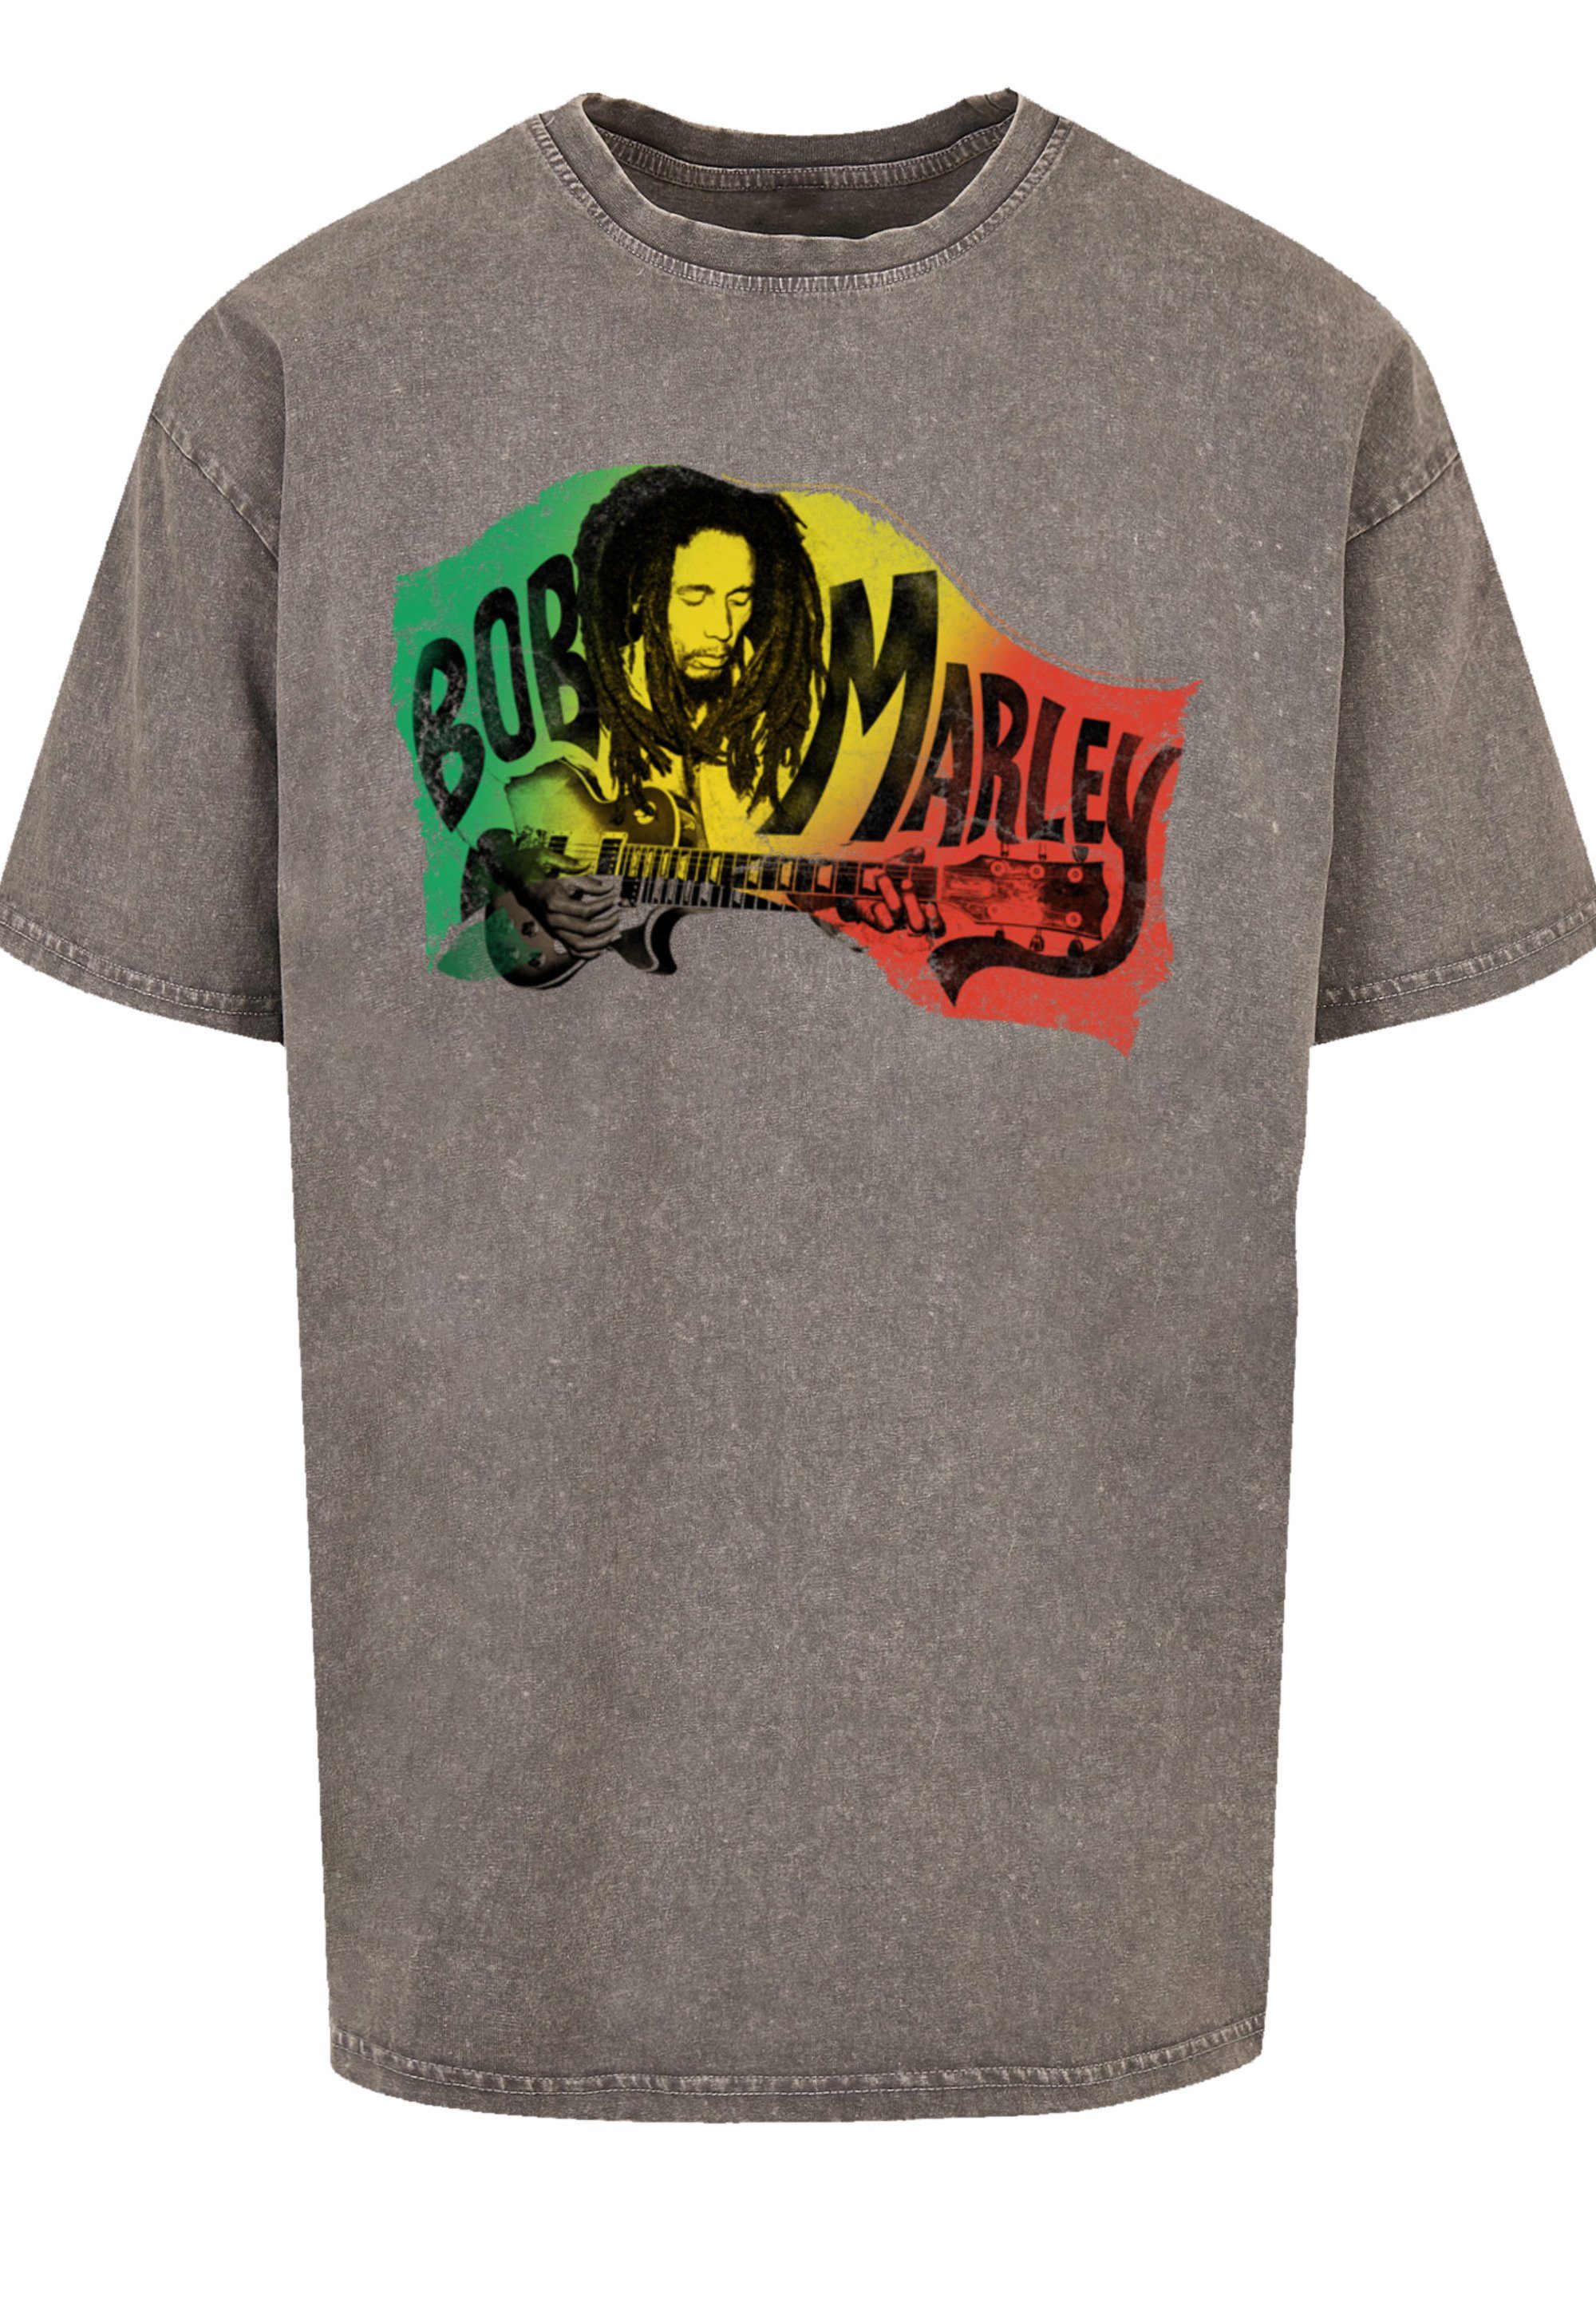 Qualität, Premium Off T-Shirt F4NT4STIC Bob By Musik, Marley Chords Reggae Music Asphalt Rock